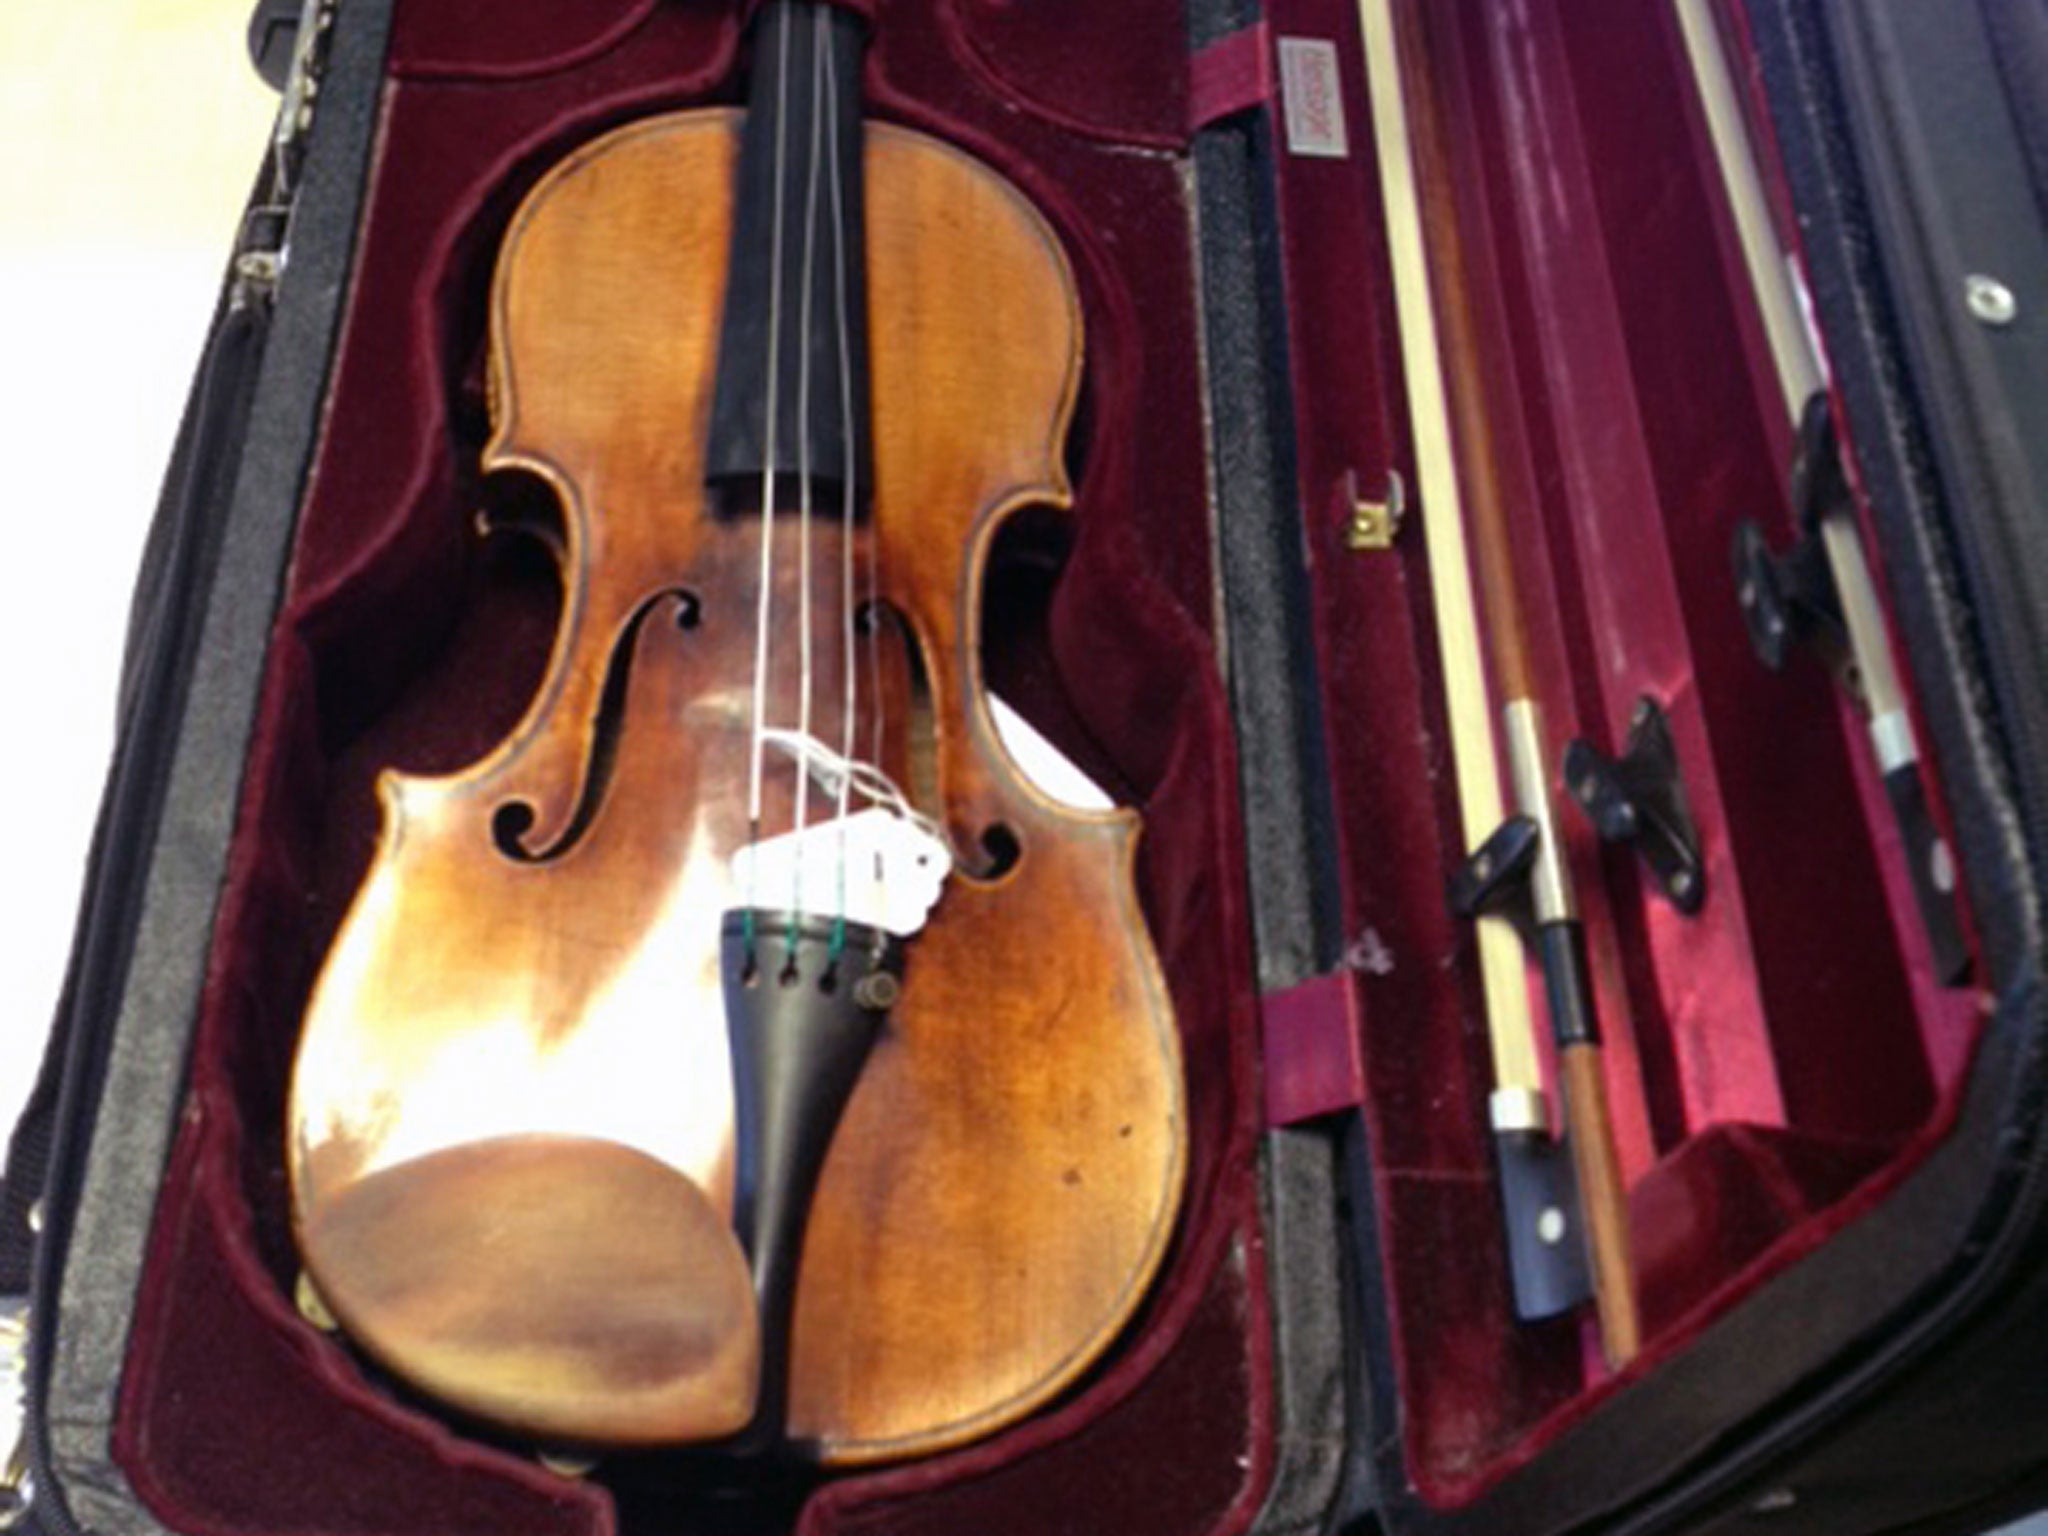 Rare 1696 Stradivarius violin worth £1.2m has finally been found by police